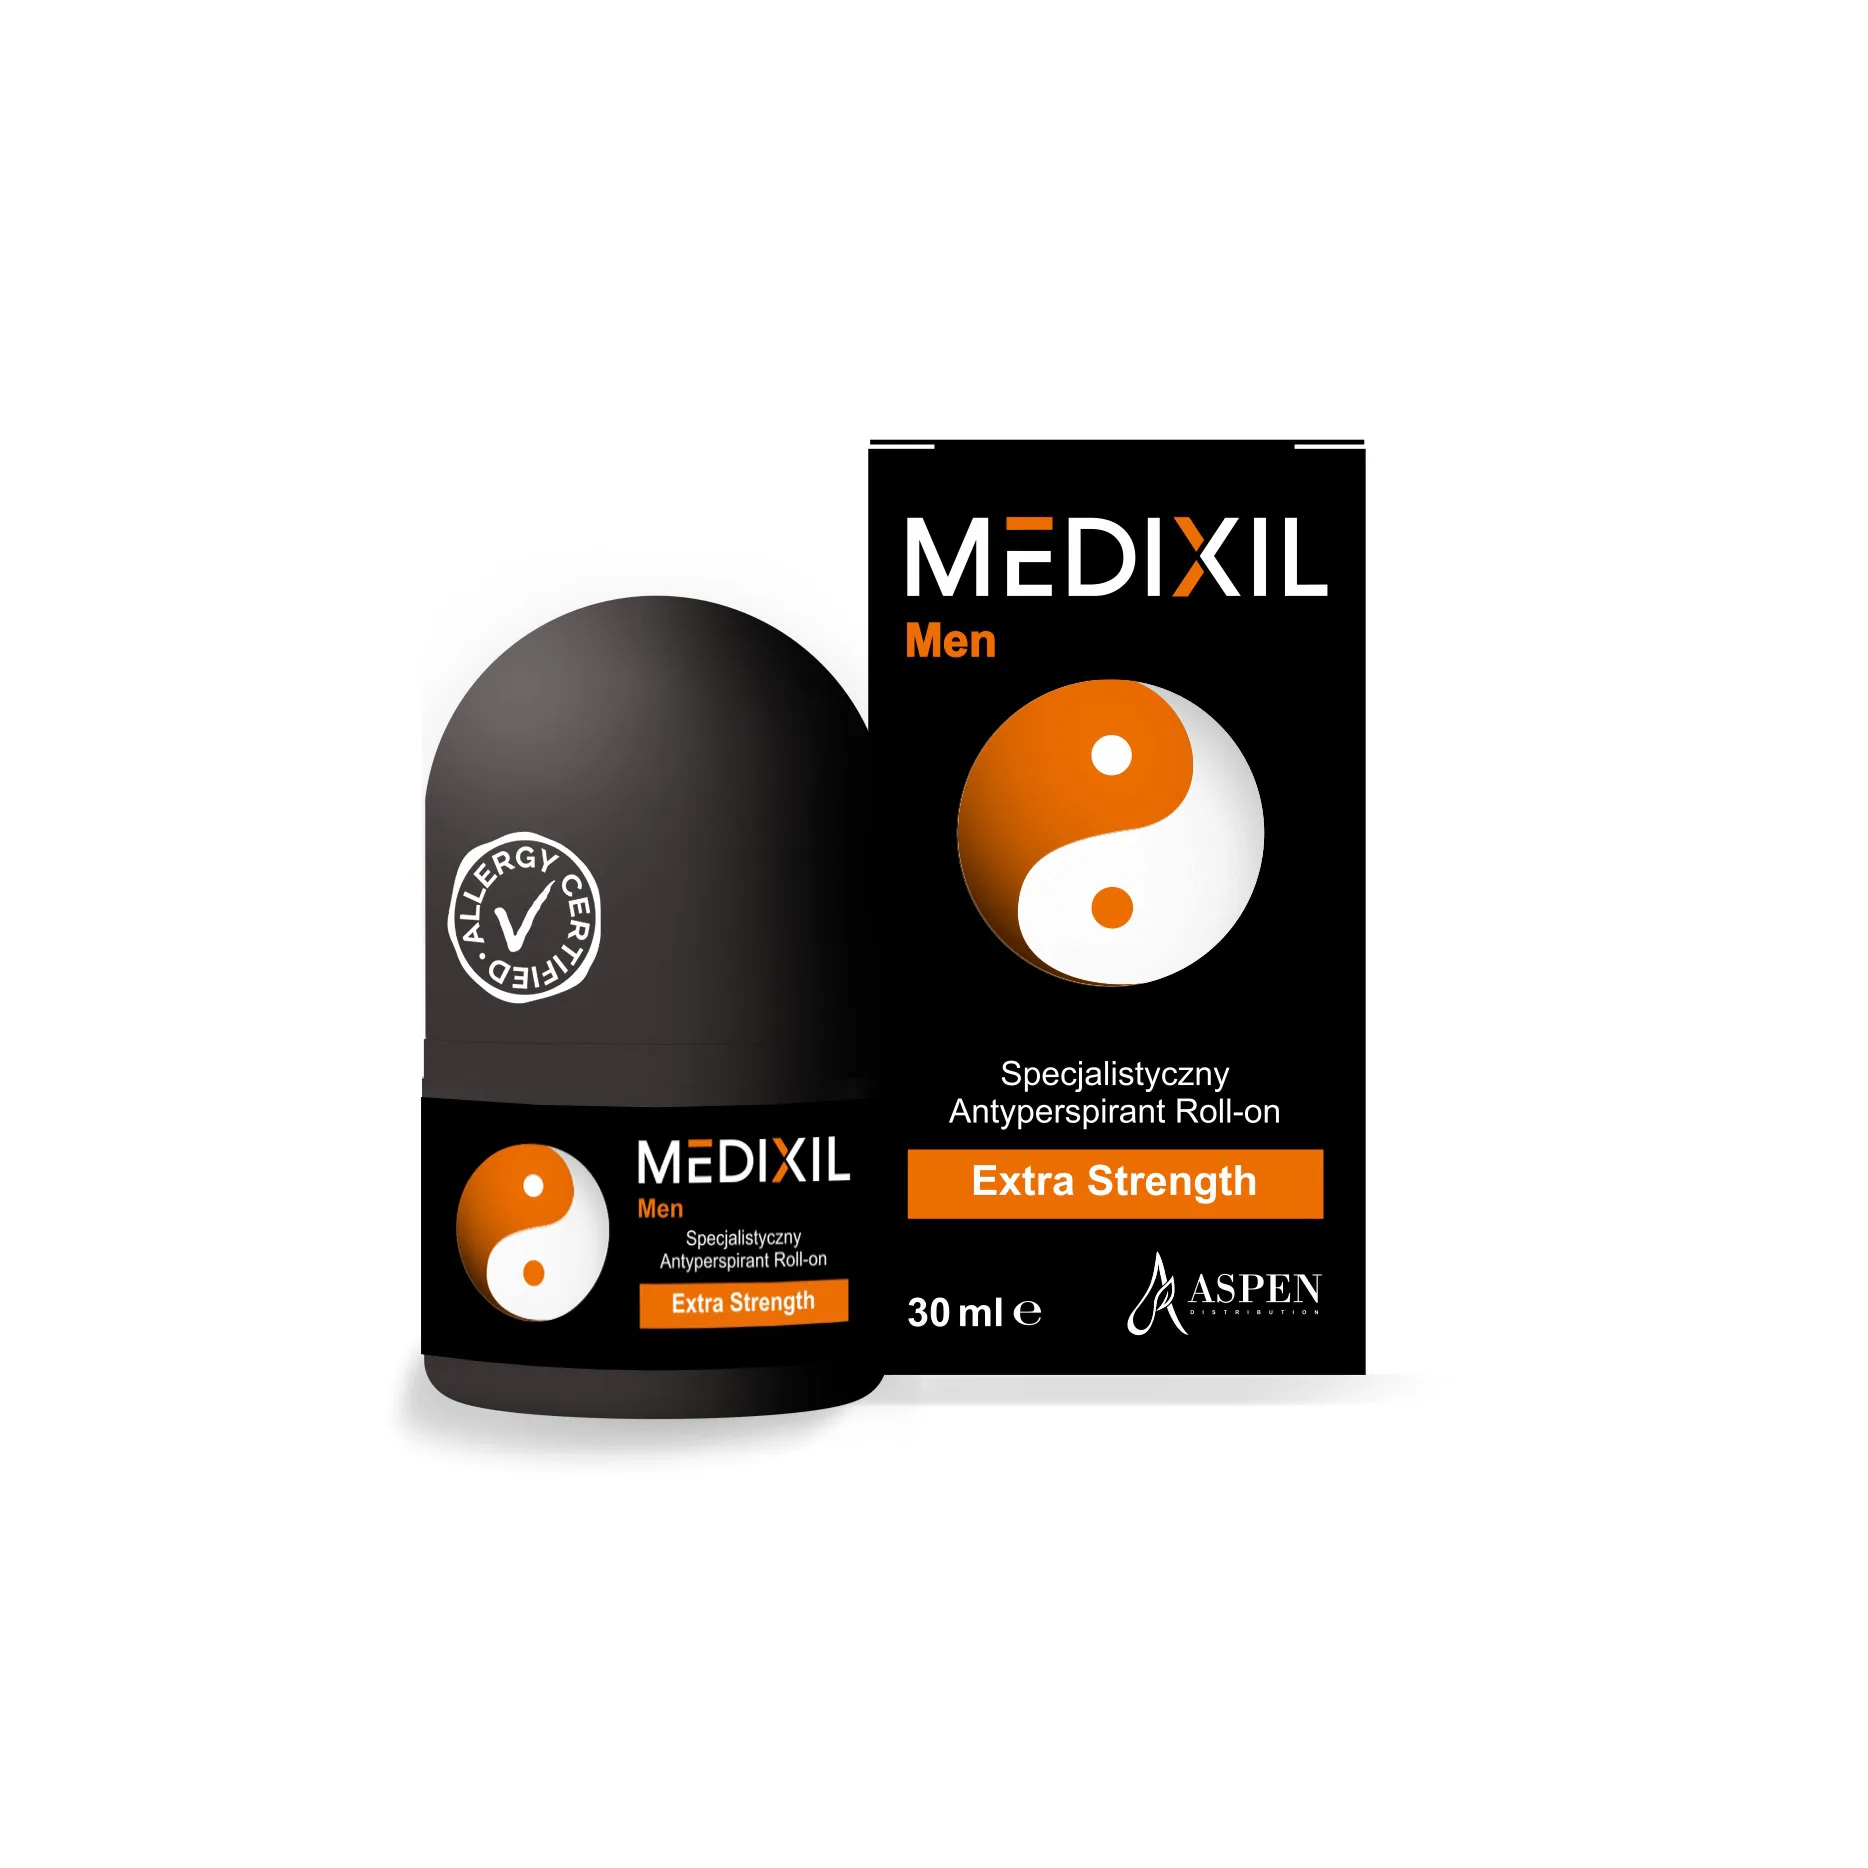 Medixil Men specjalistyczny antyperspirant roll-on, 30 ml